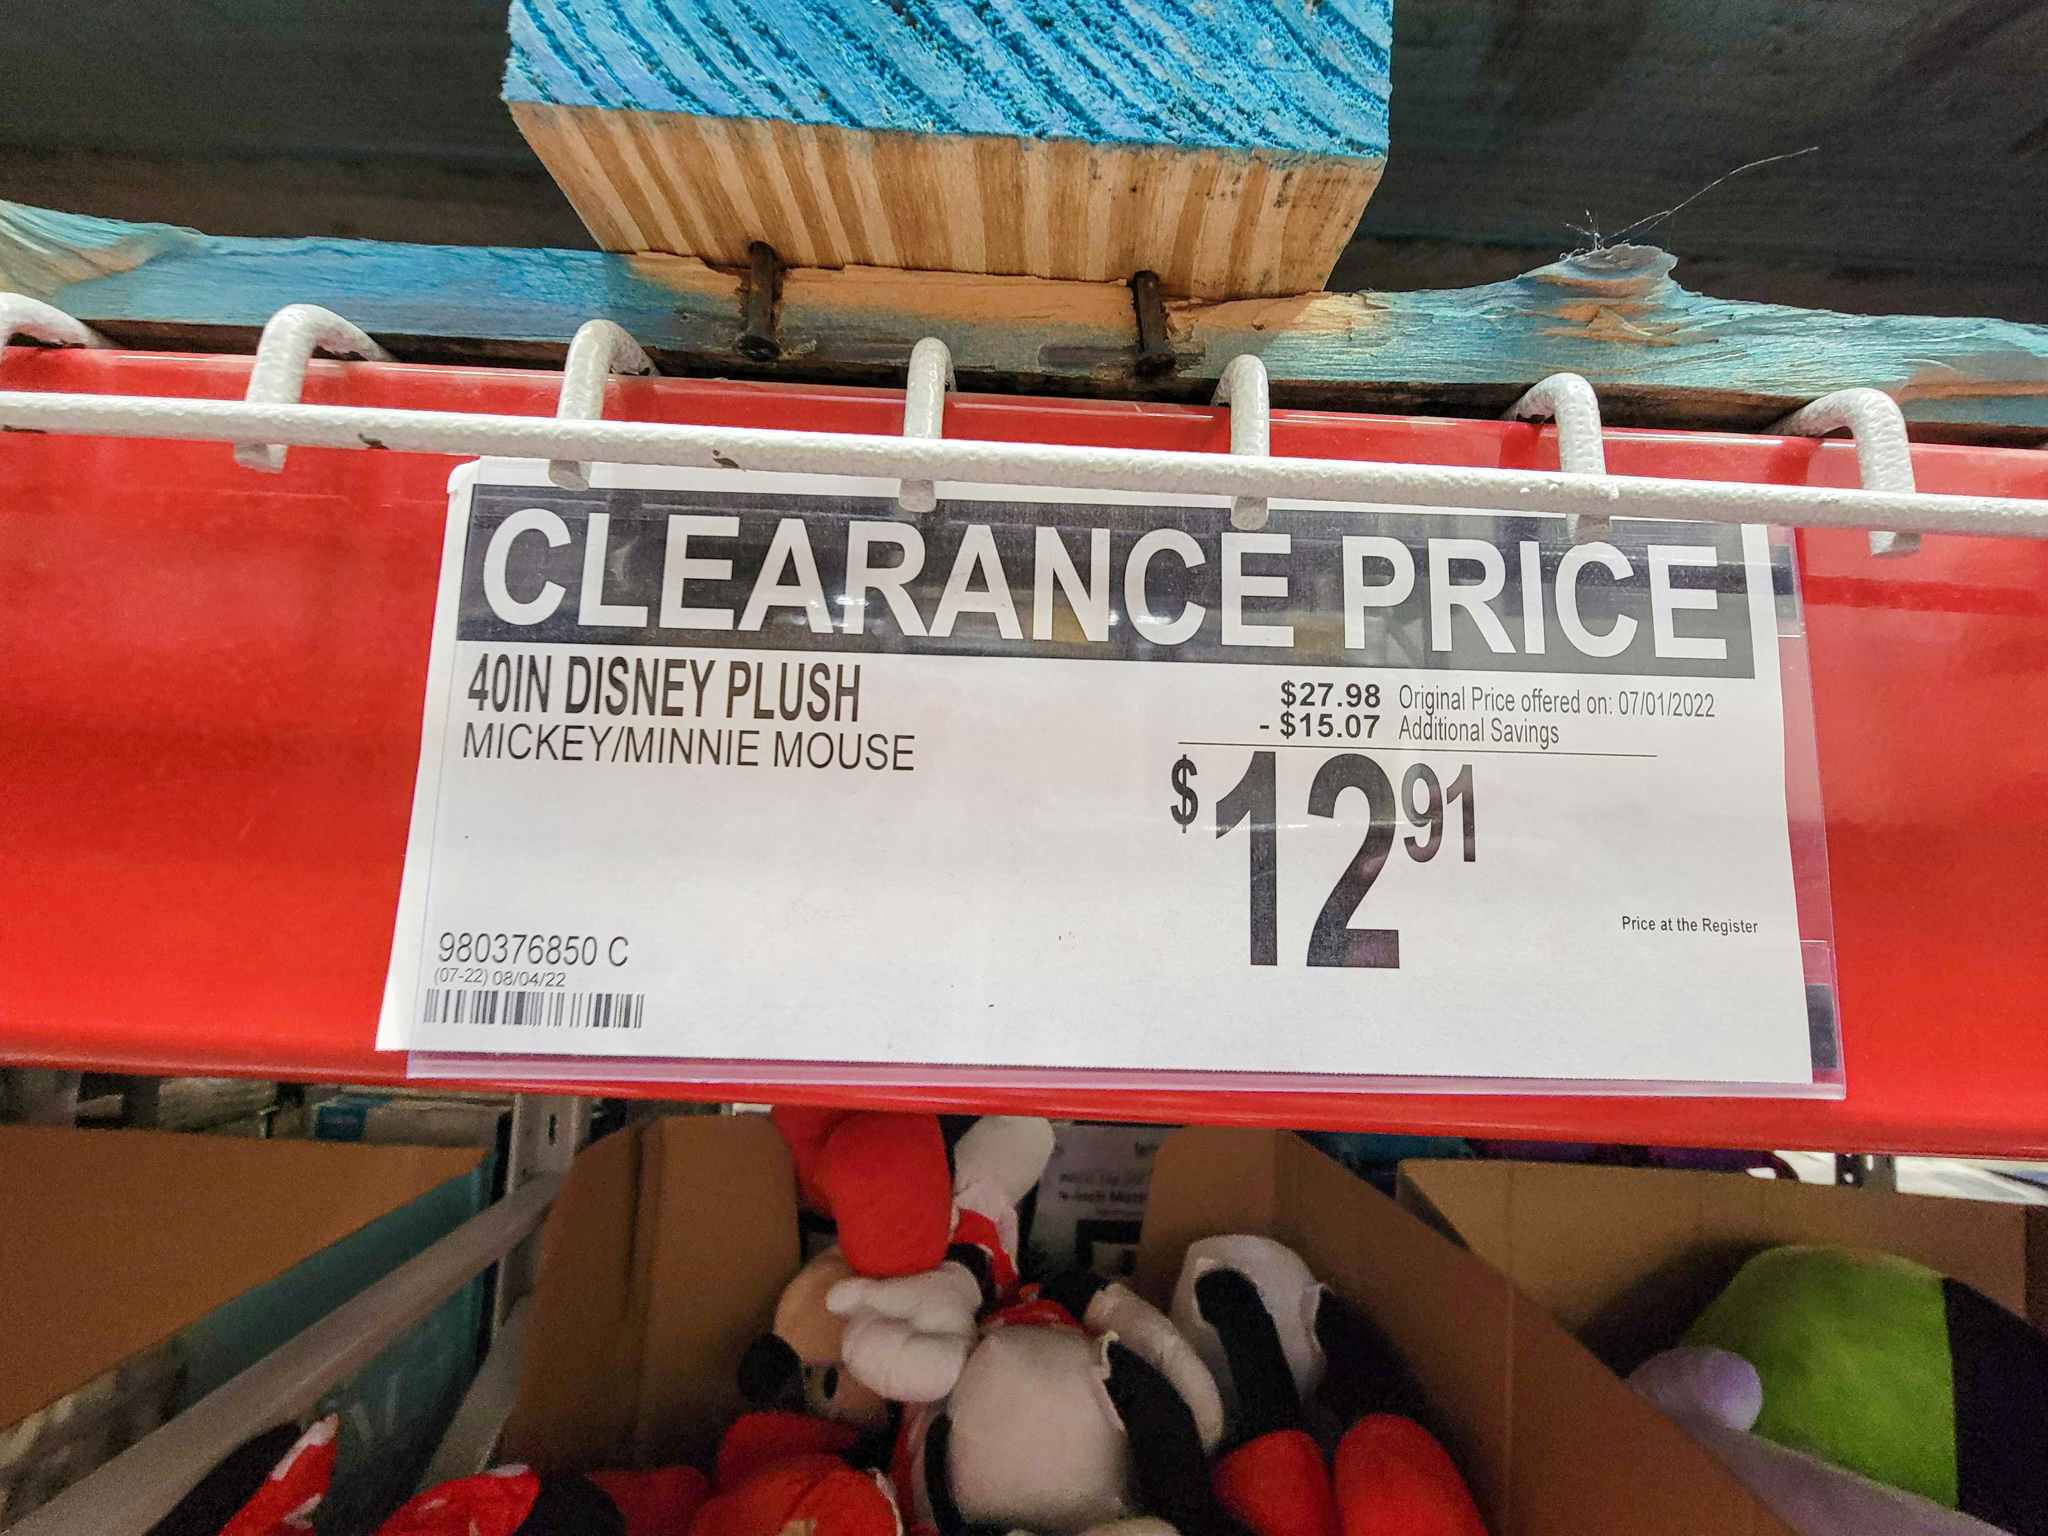 clearance tag for $12.91 jumbo disney plush